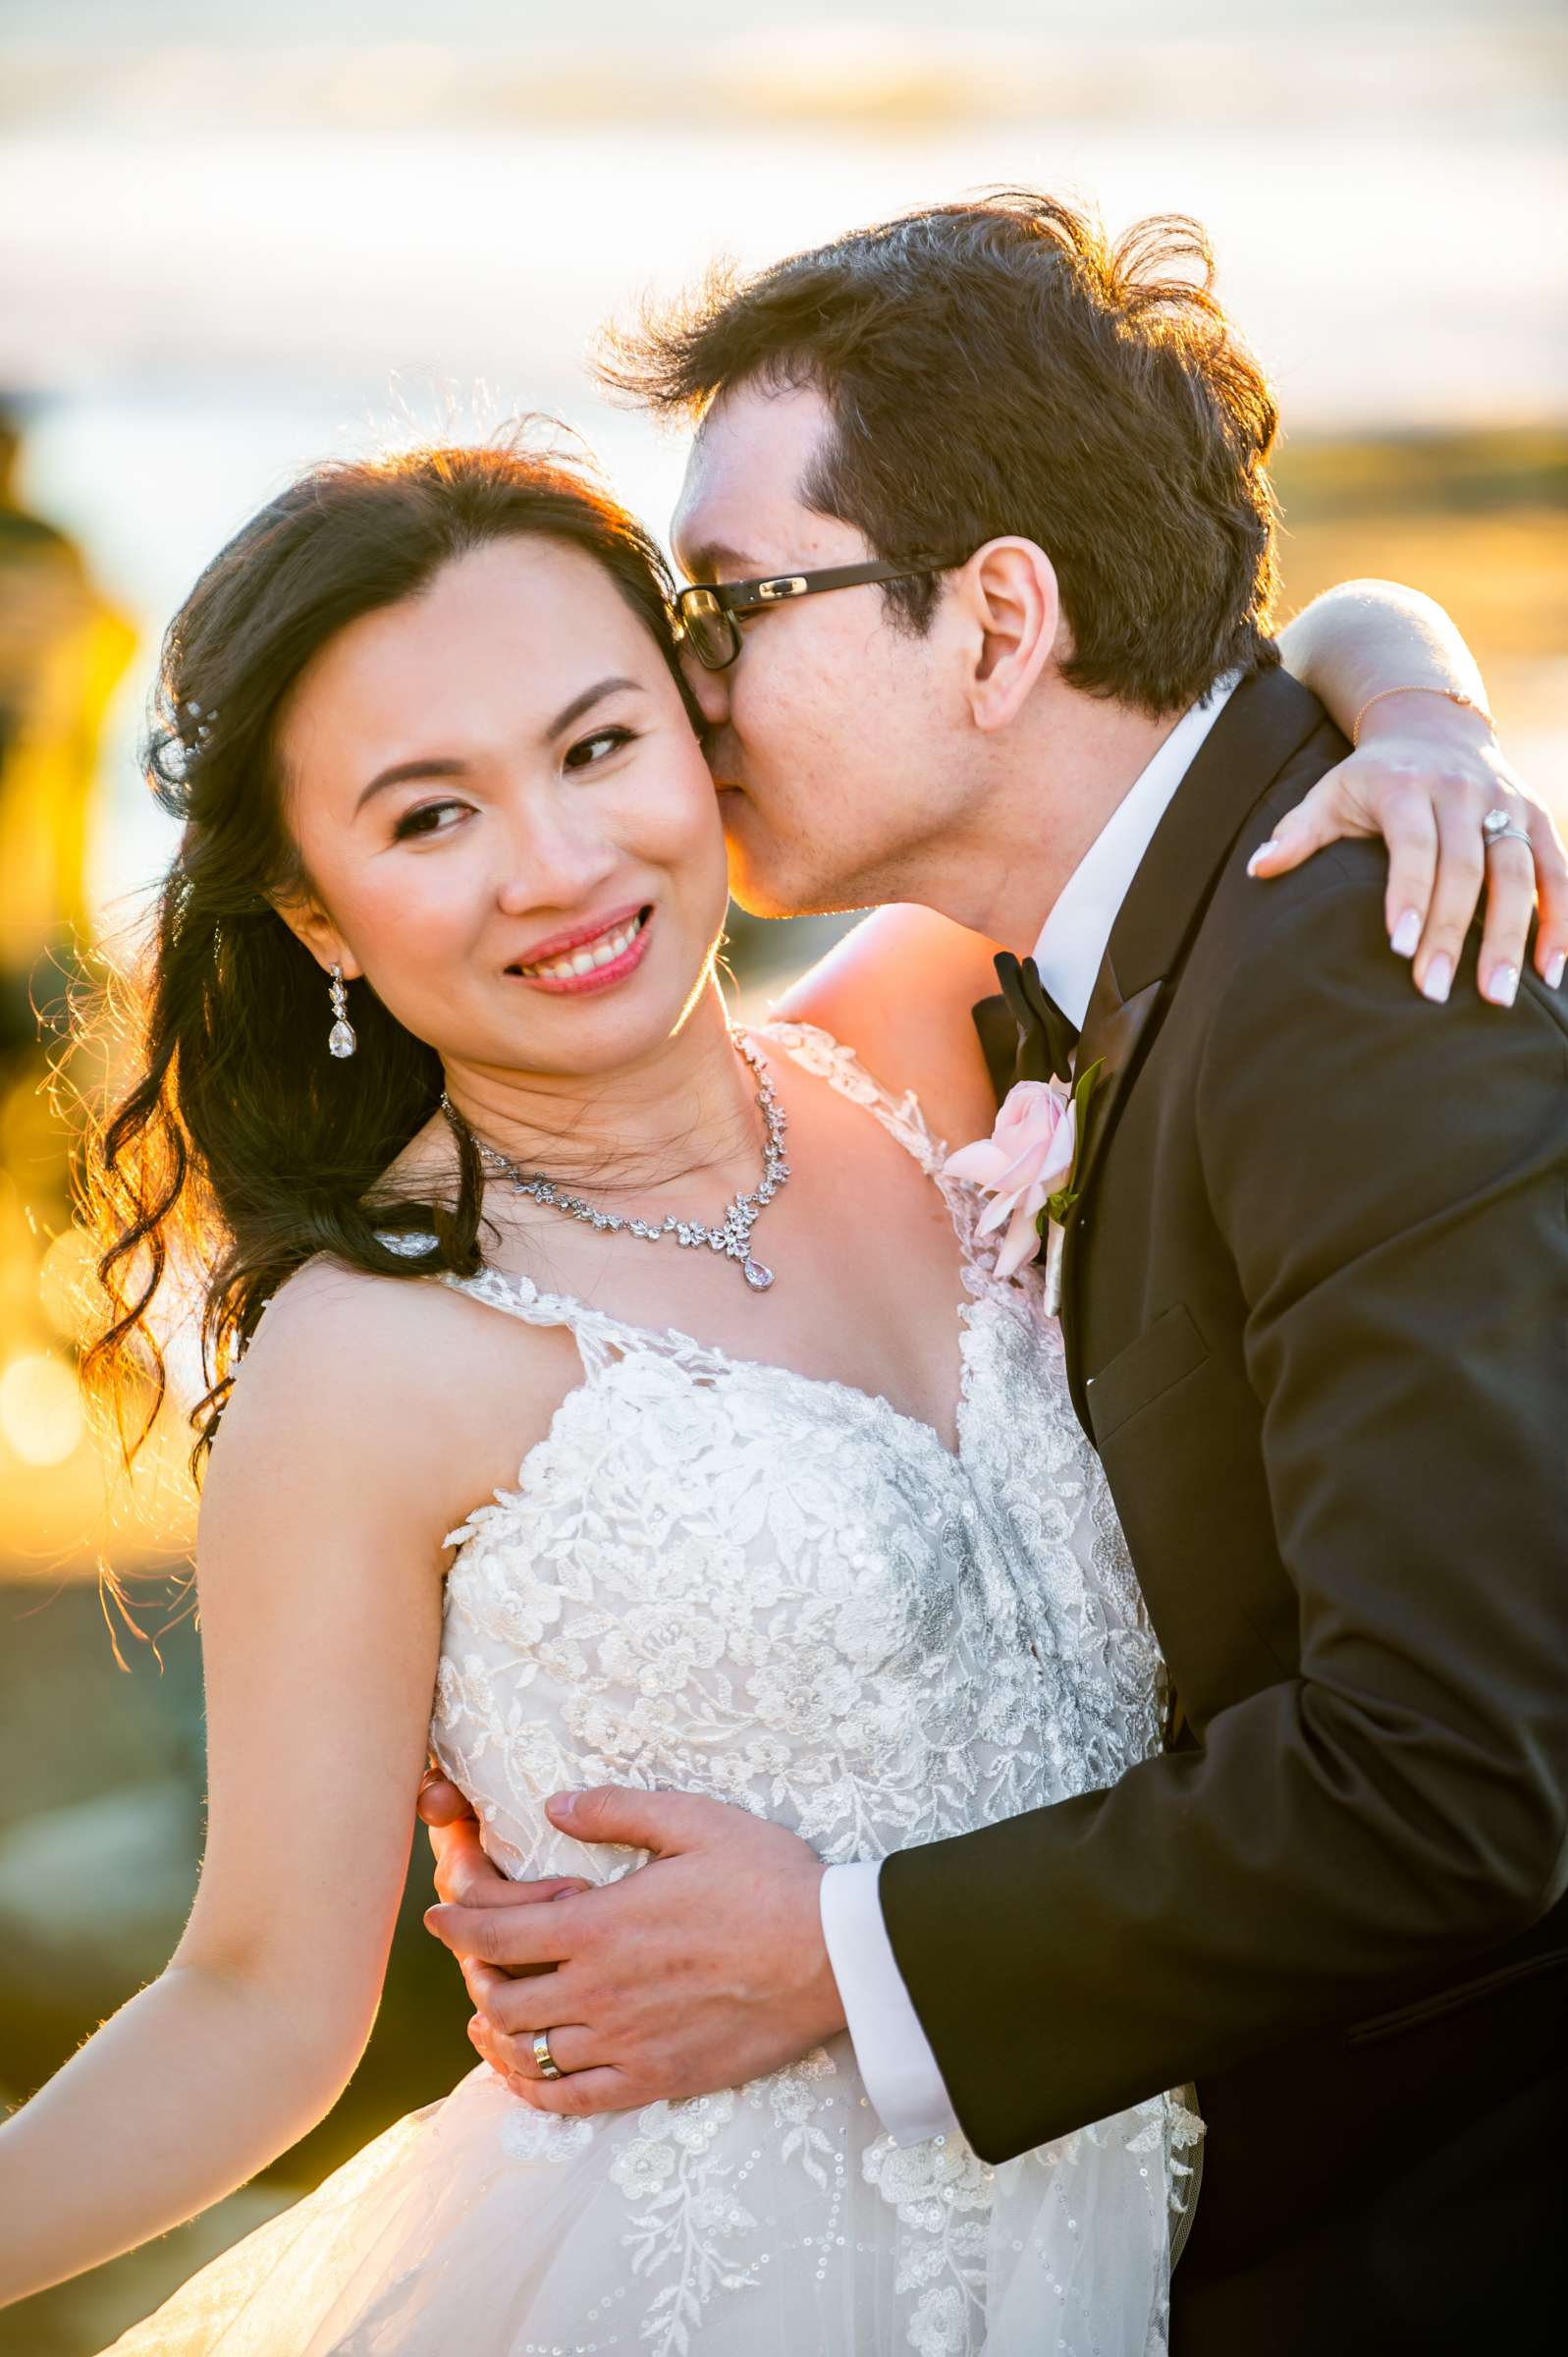 Cuvier Park-The Wedding Bowl Wedding, Yanjie and Tony Wedding Photo #14 by True Photography